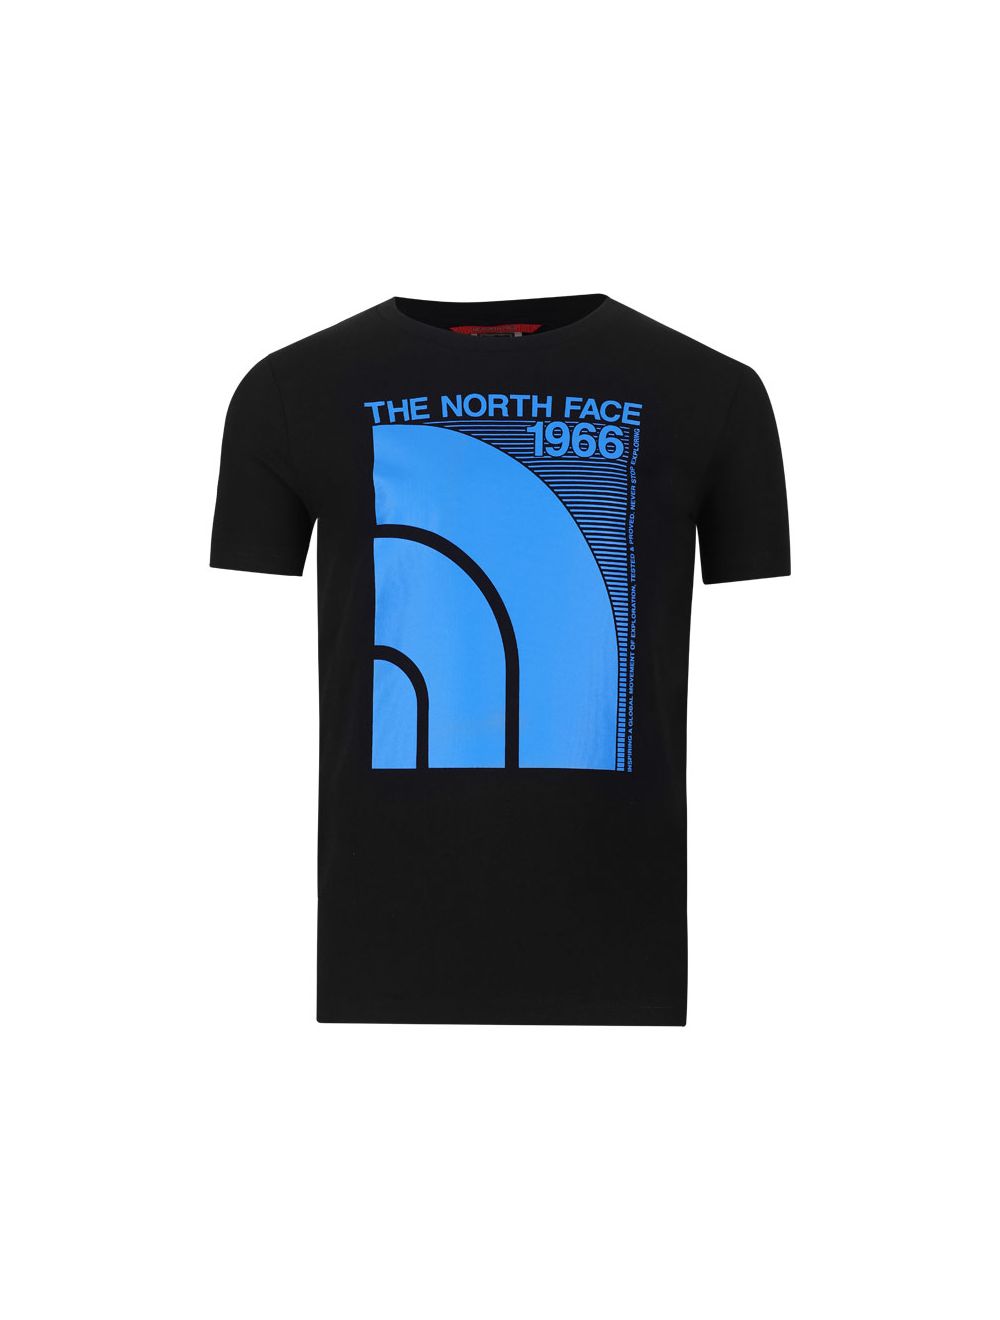 The North Face, Shirts